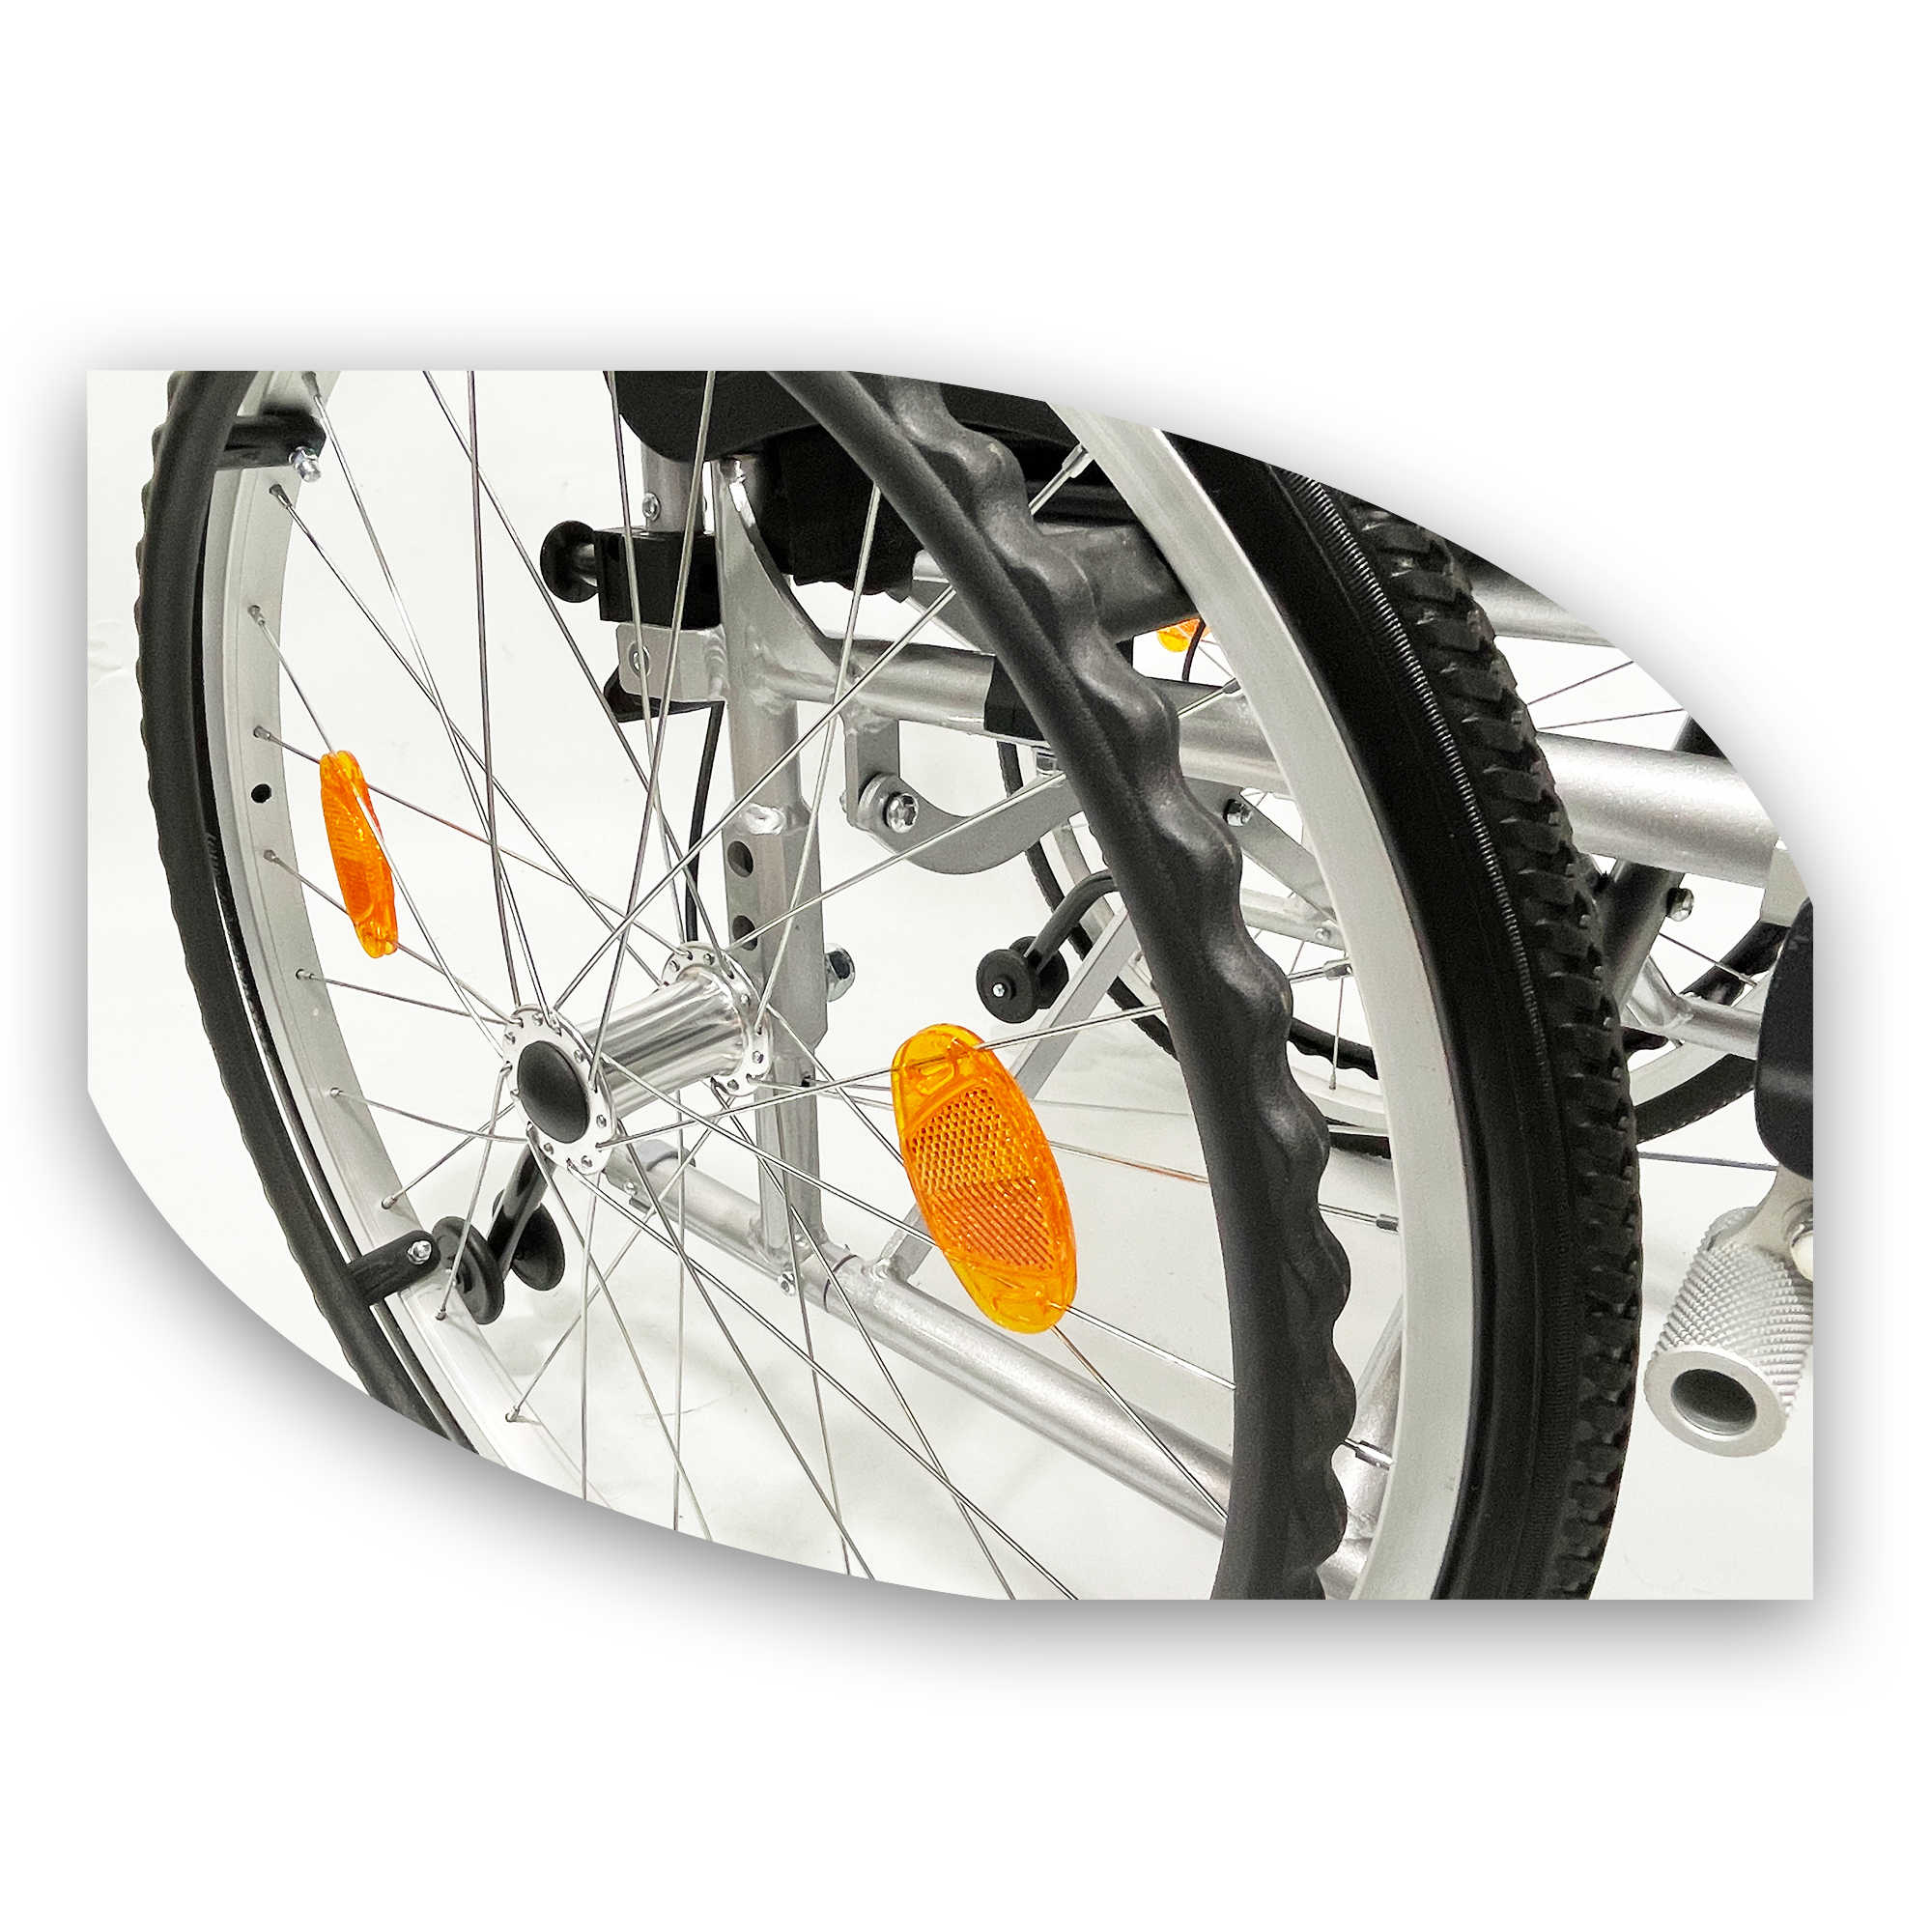 ASSURE REHAB Lightweight Detachable Wheelchair